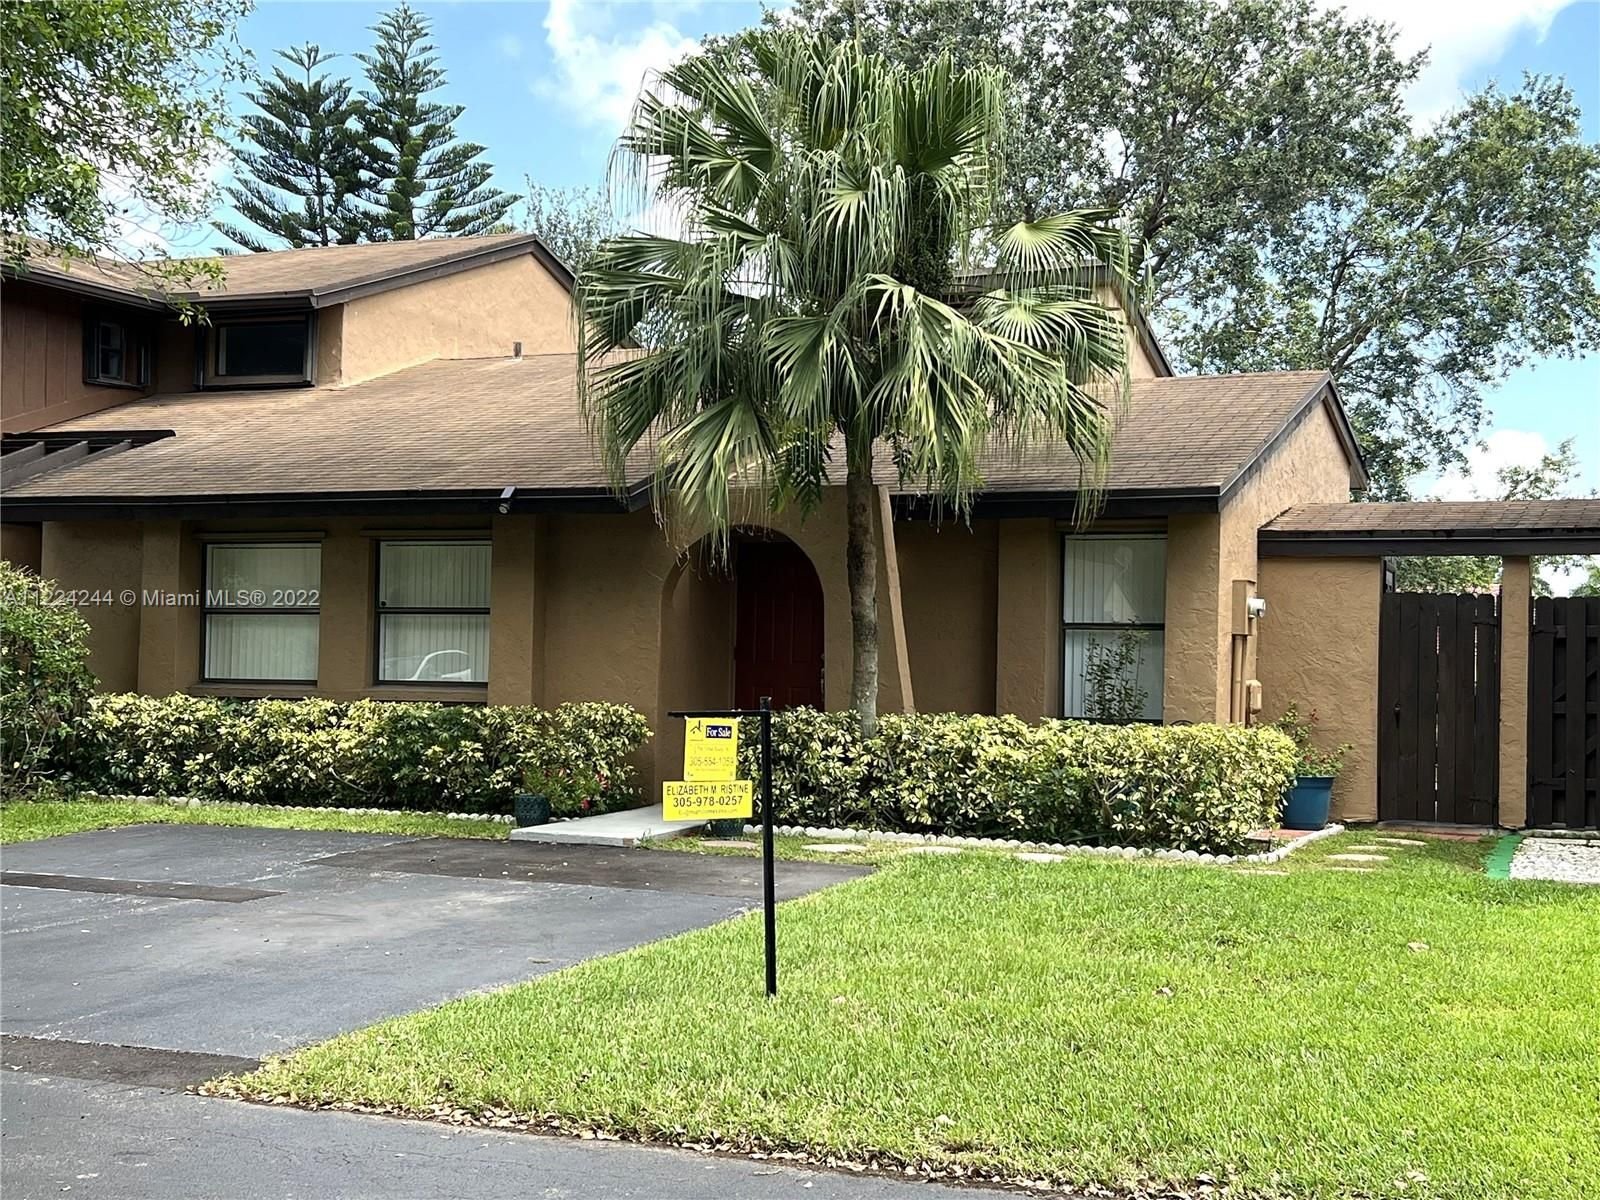 Real estate property located at 12941 66th Terrace Dr #12941, Miami-Dade County, Miami, FL